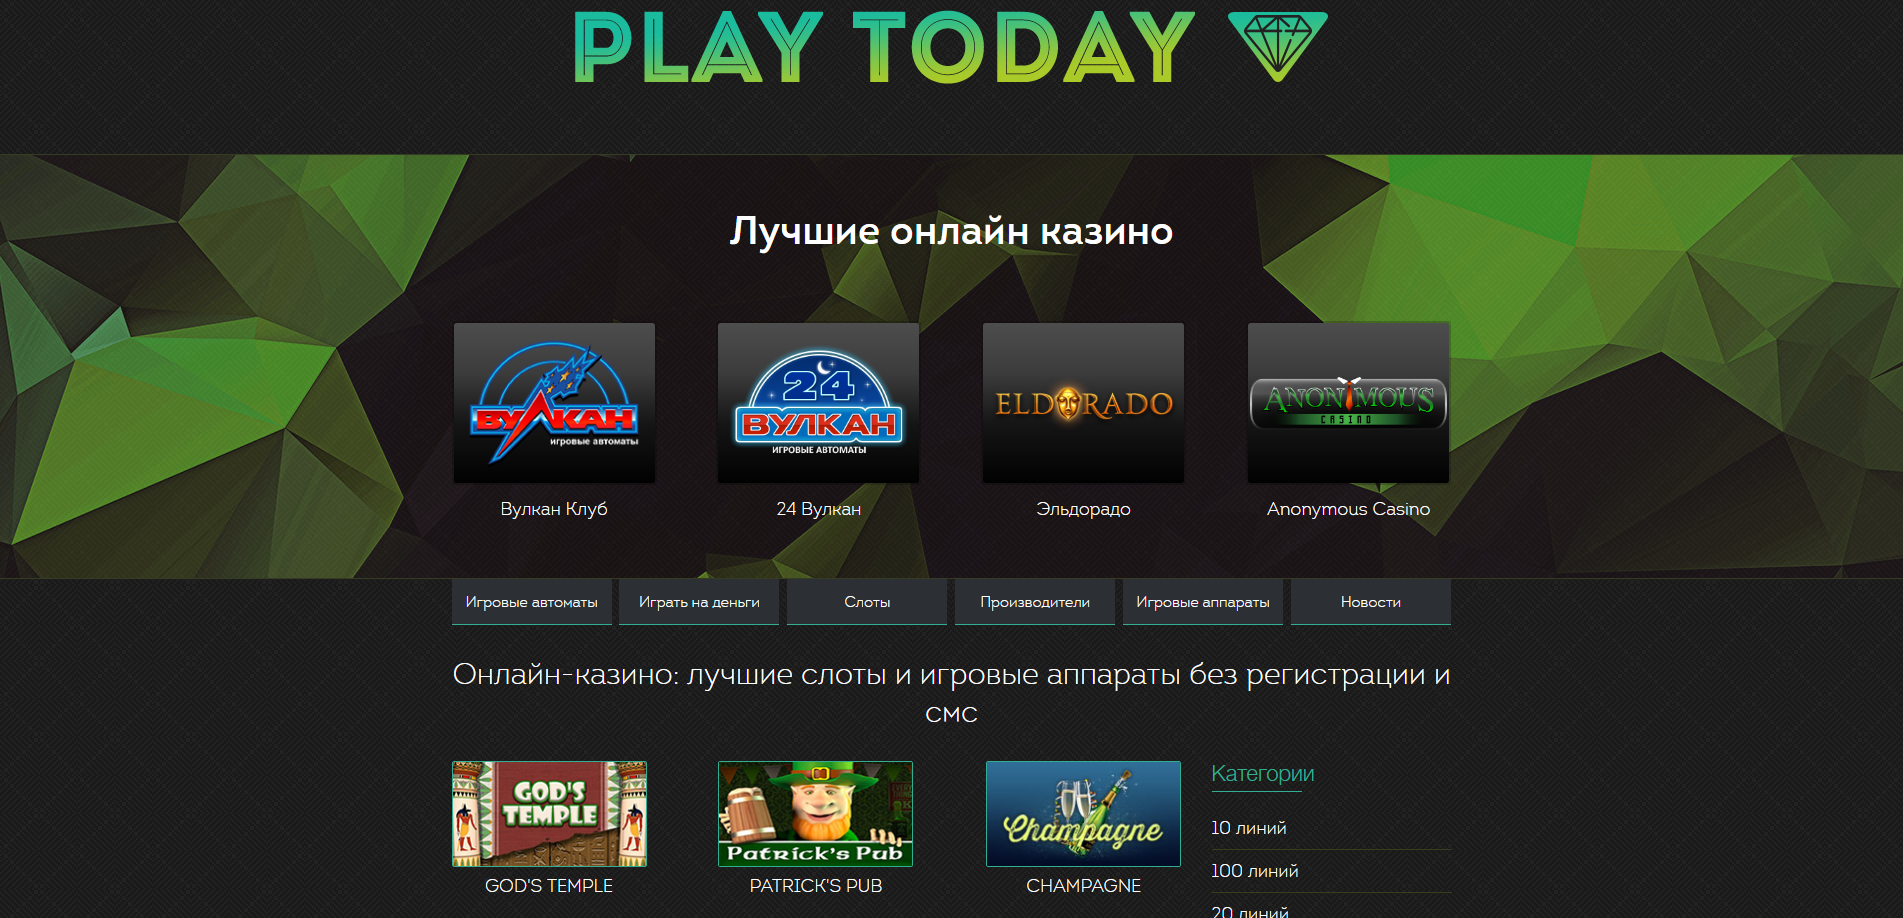 Slot gratis para jugar online